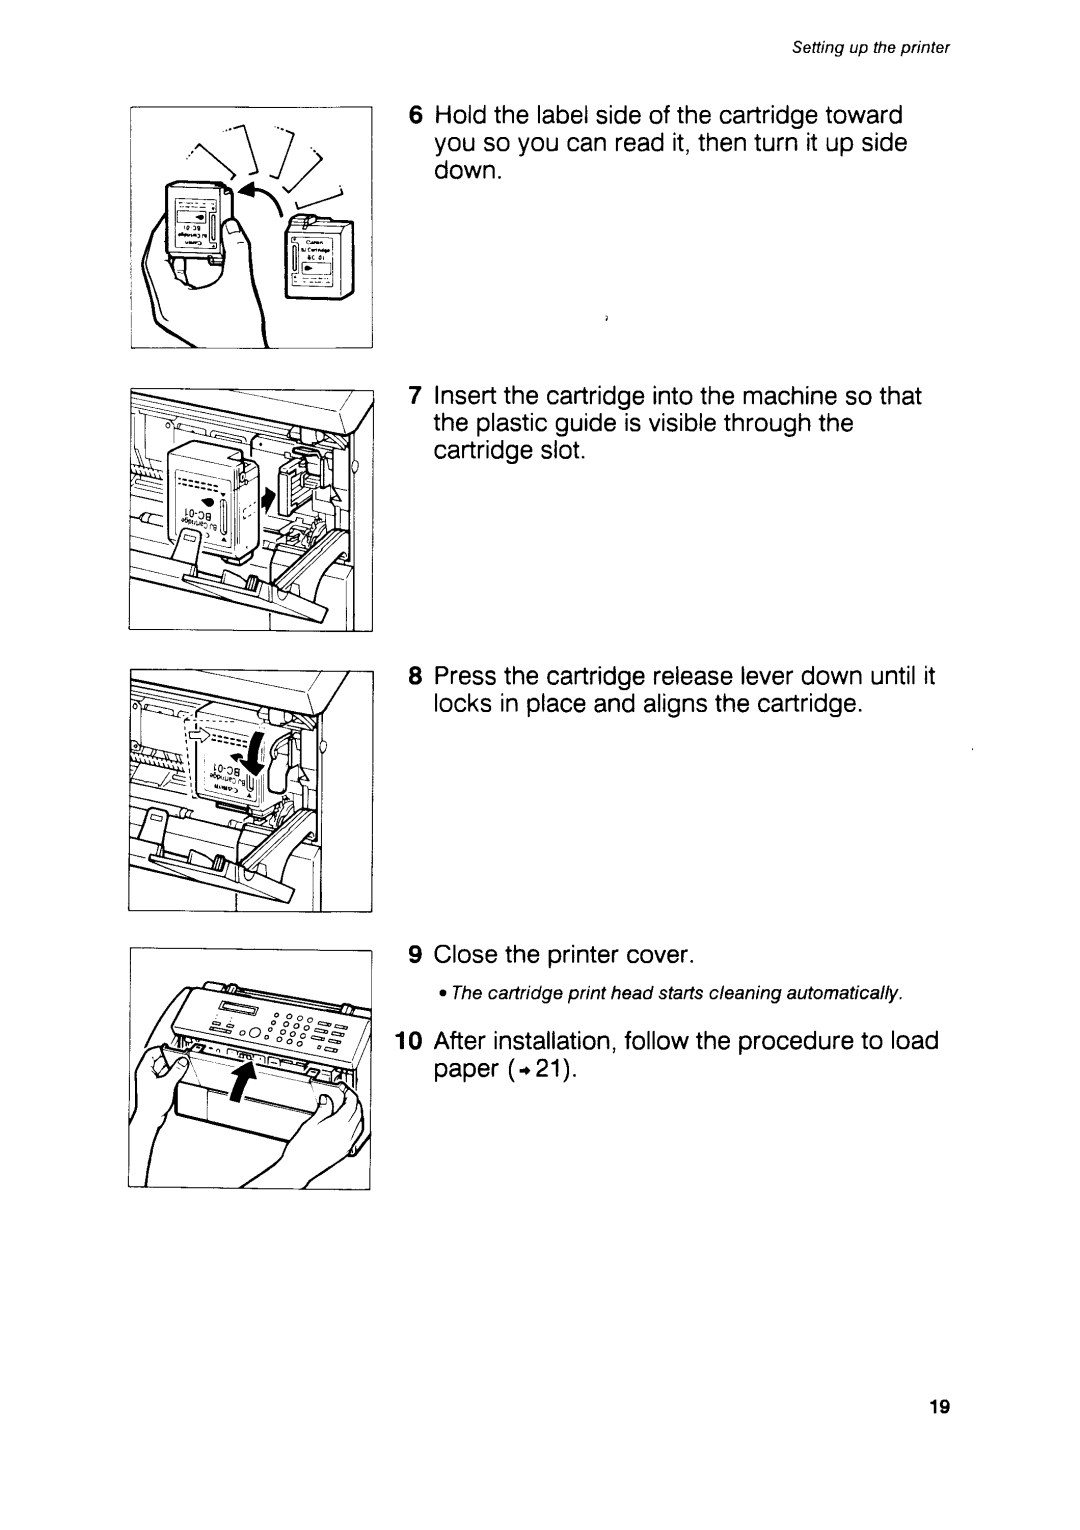 Canon B75 manual Afterinstallation,followtheprocedureto load paper.21 